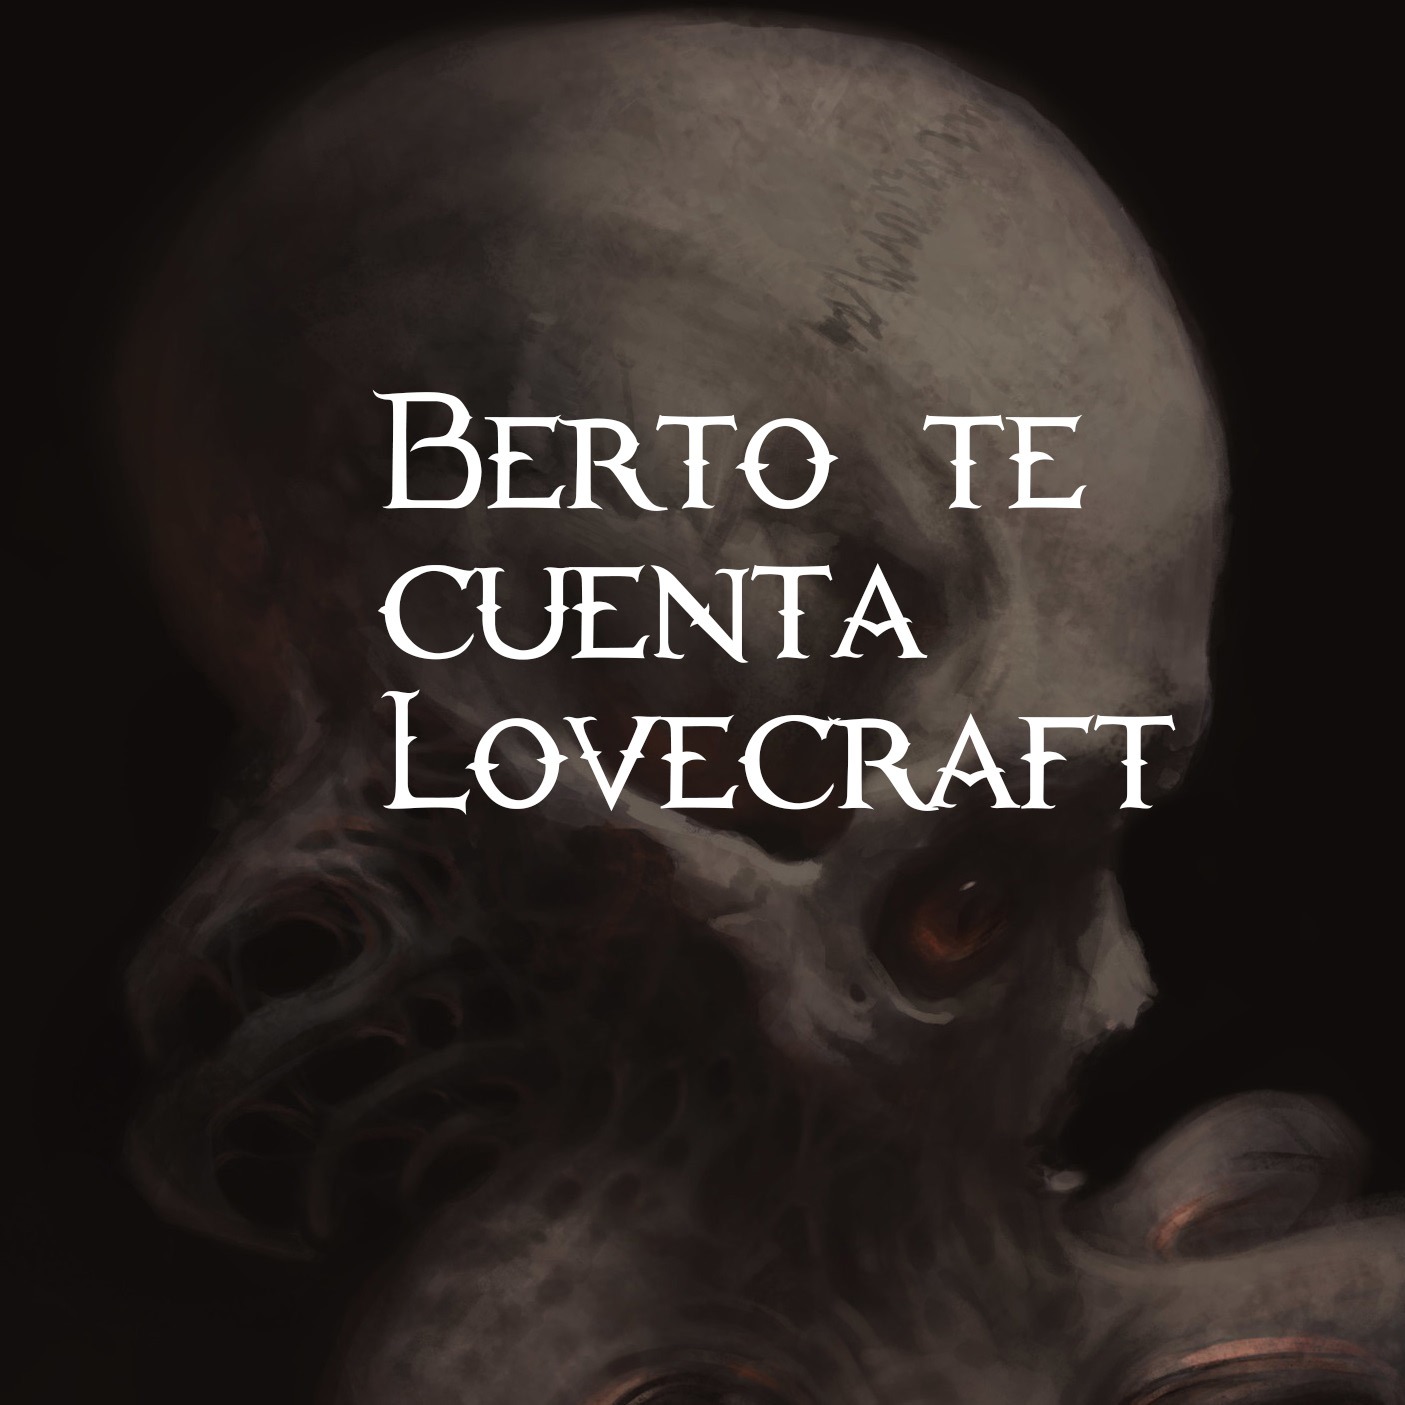 Berto te cuenta Lovecraft